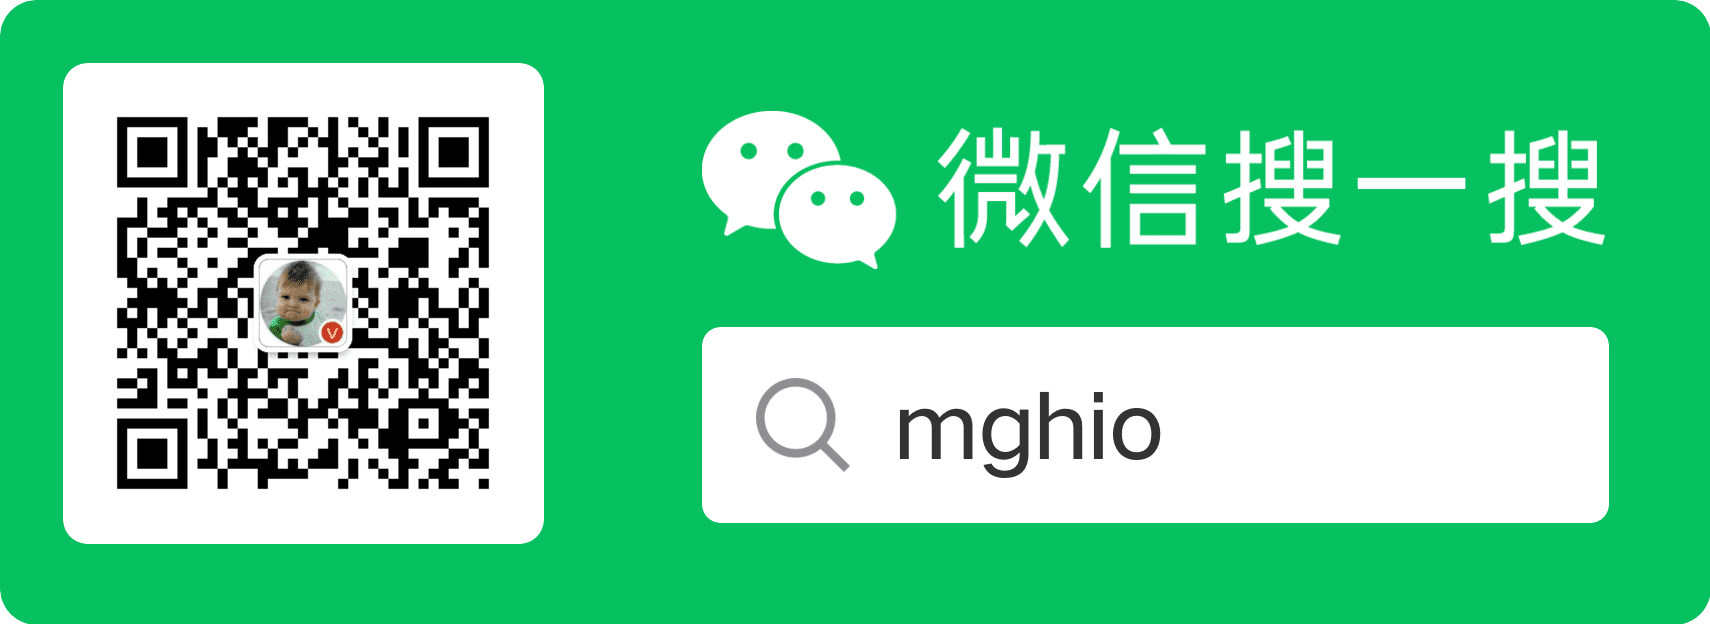 mghio-default-compress.png